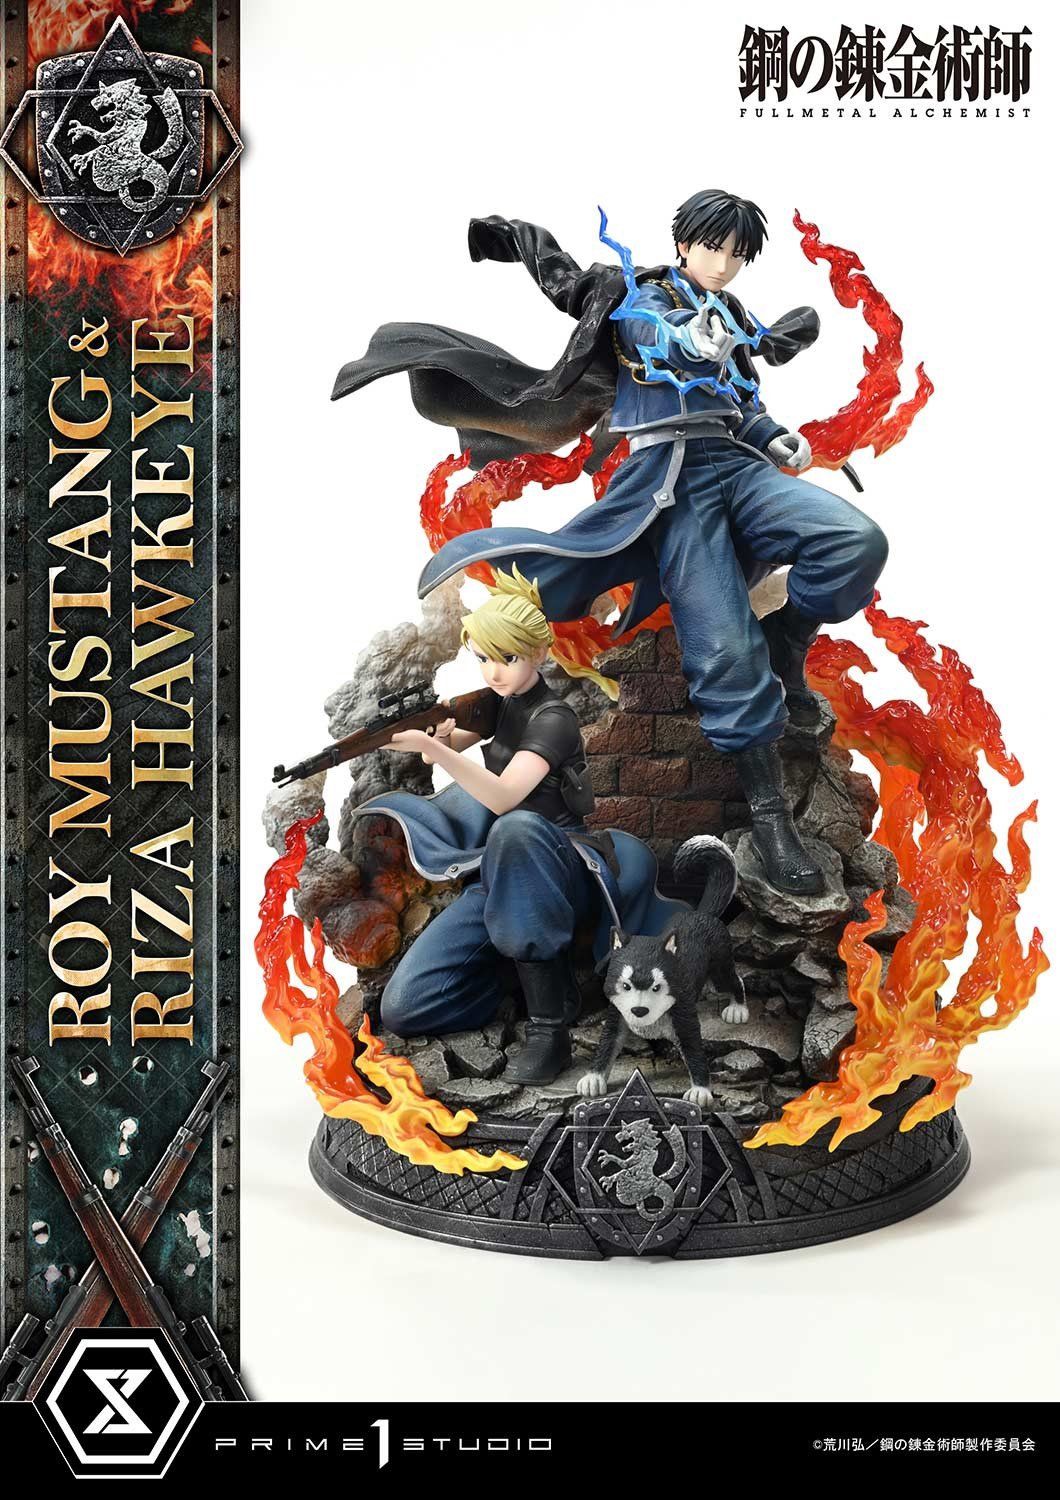  Roy Mustang & Riza Hawkeye - Fullmatal Alchemist ( licensed ) - Prime 1 Studio 